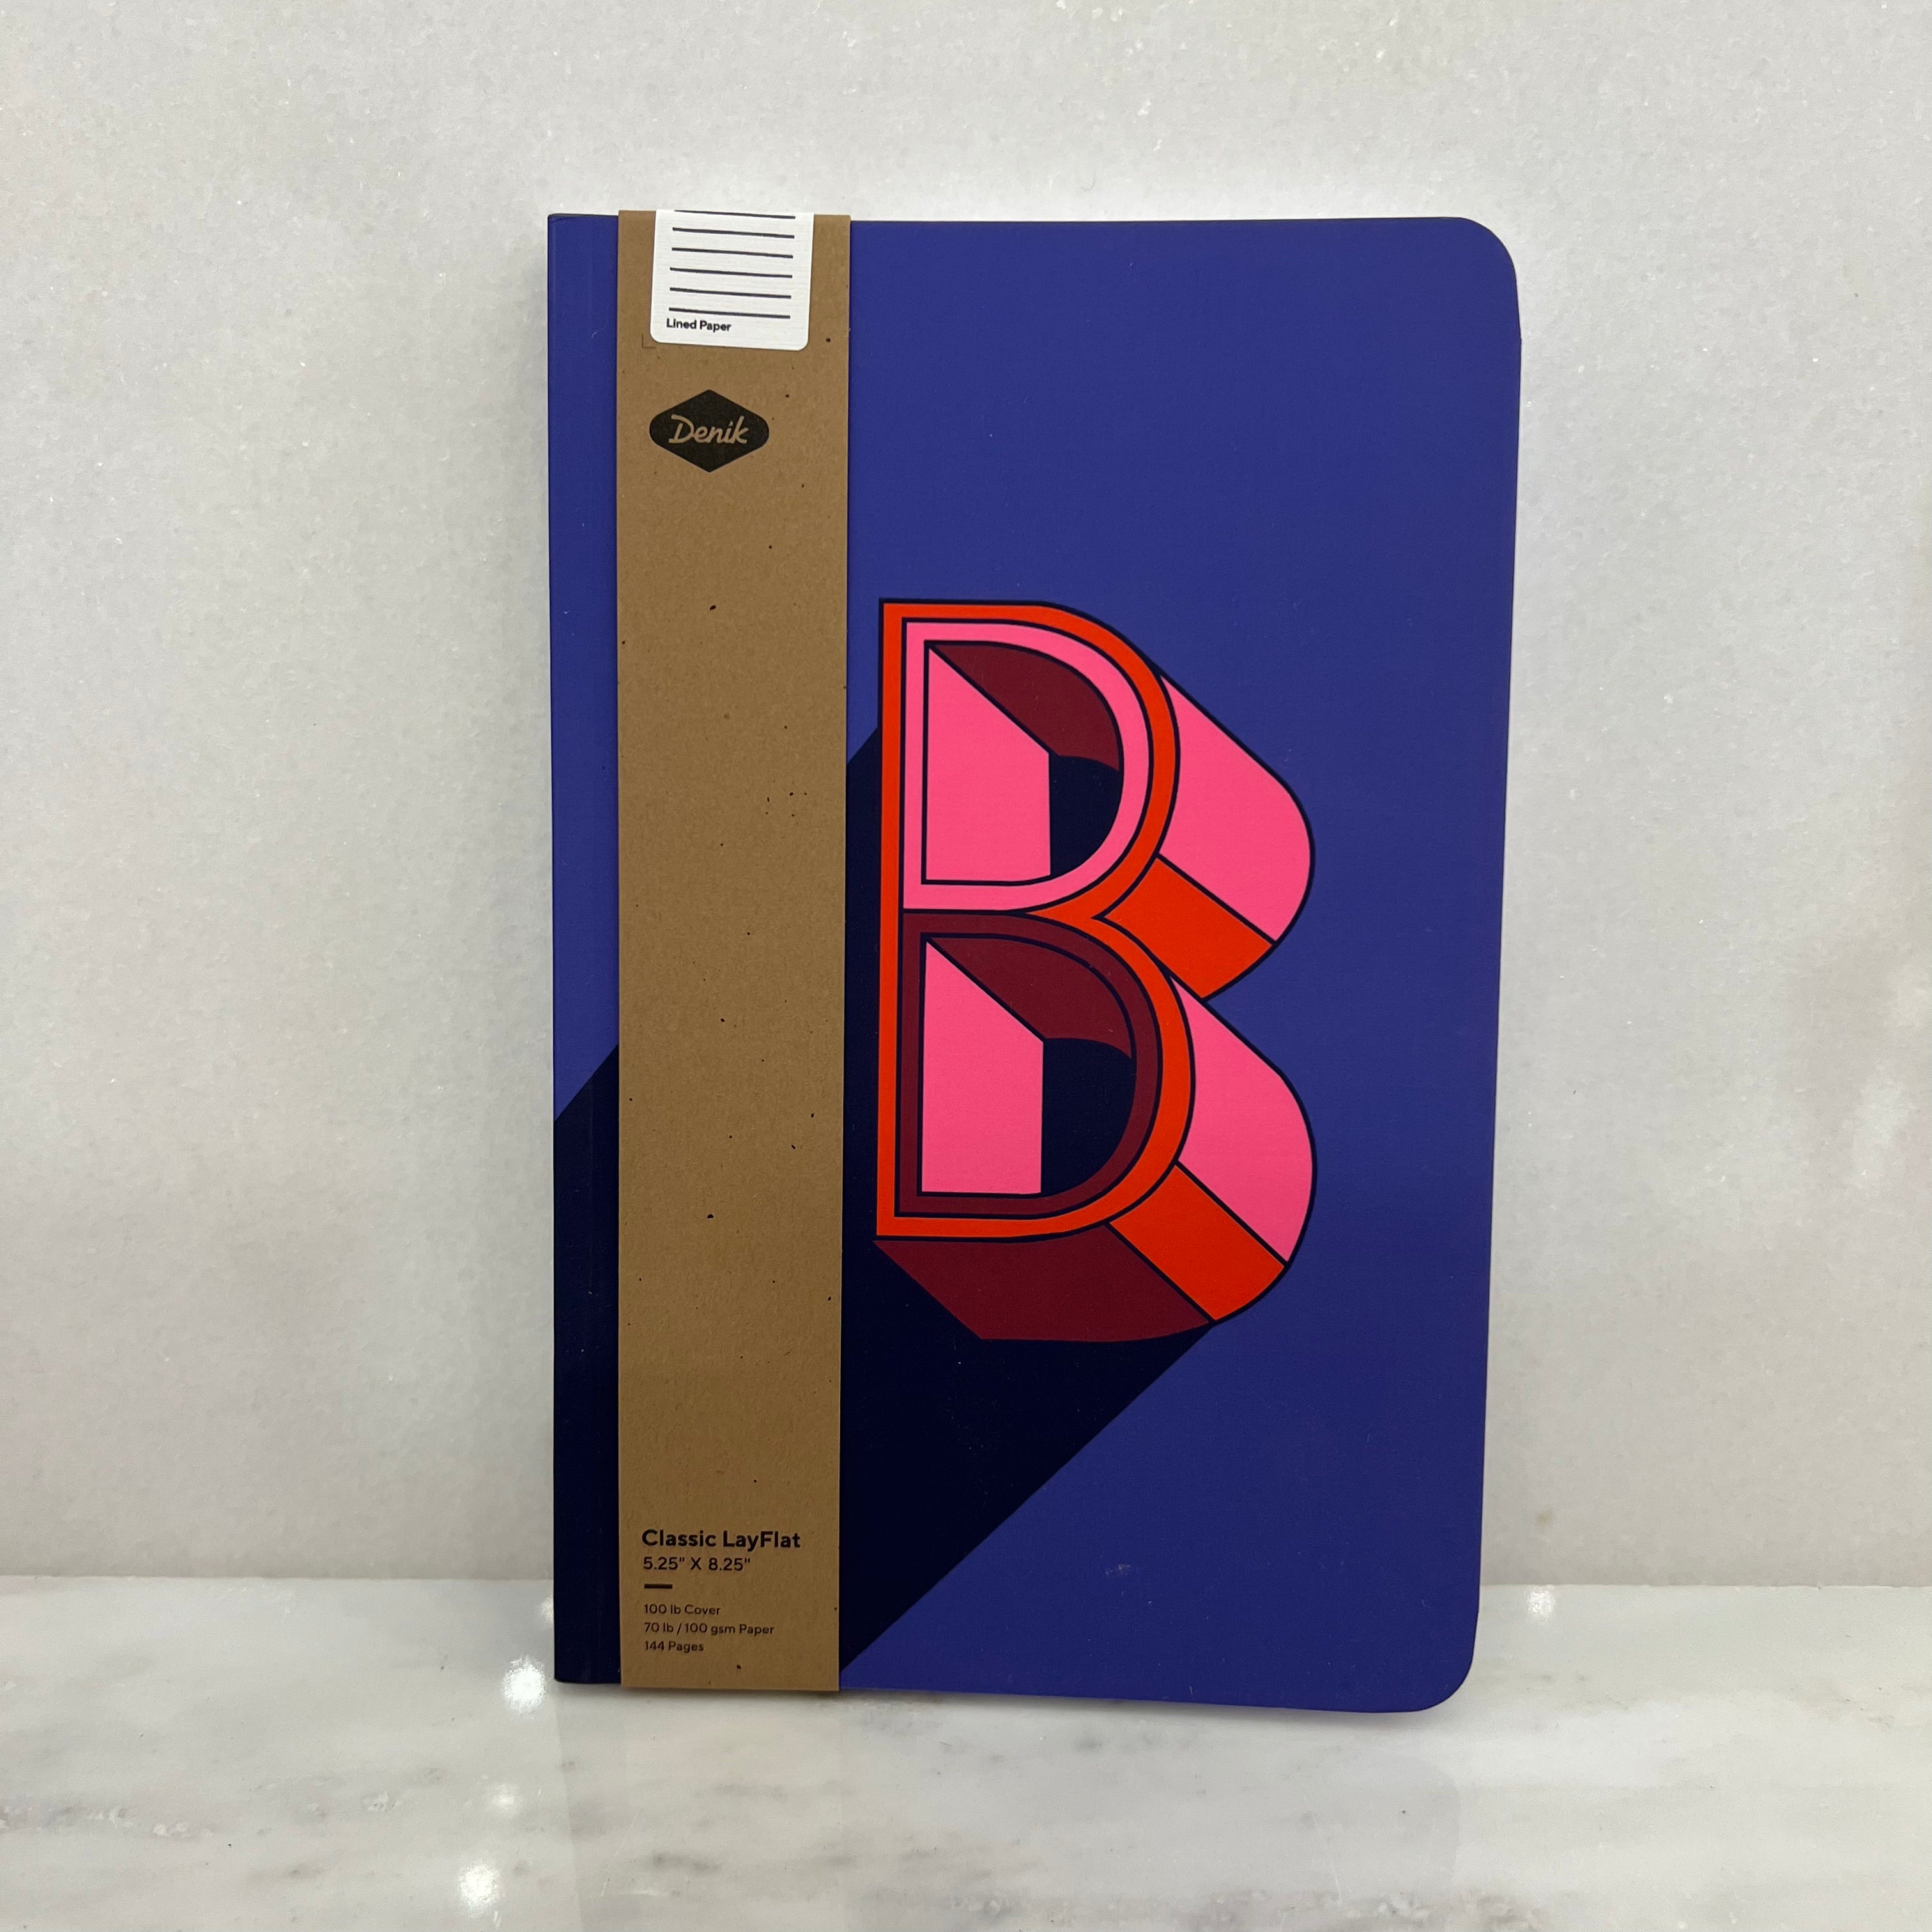 Denik "B" blue cover classic layflat notebook